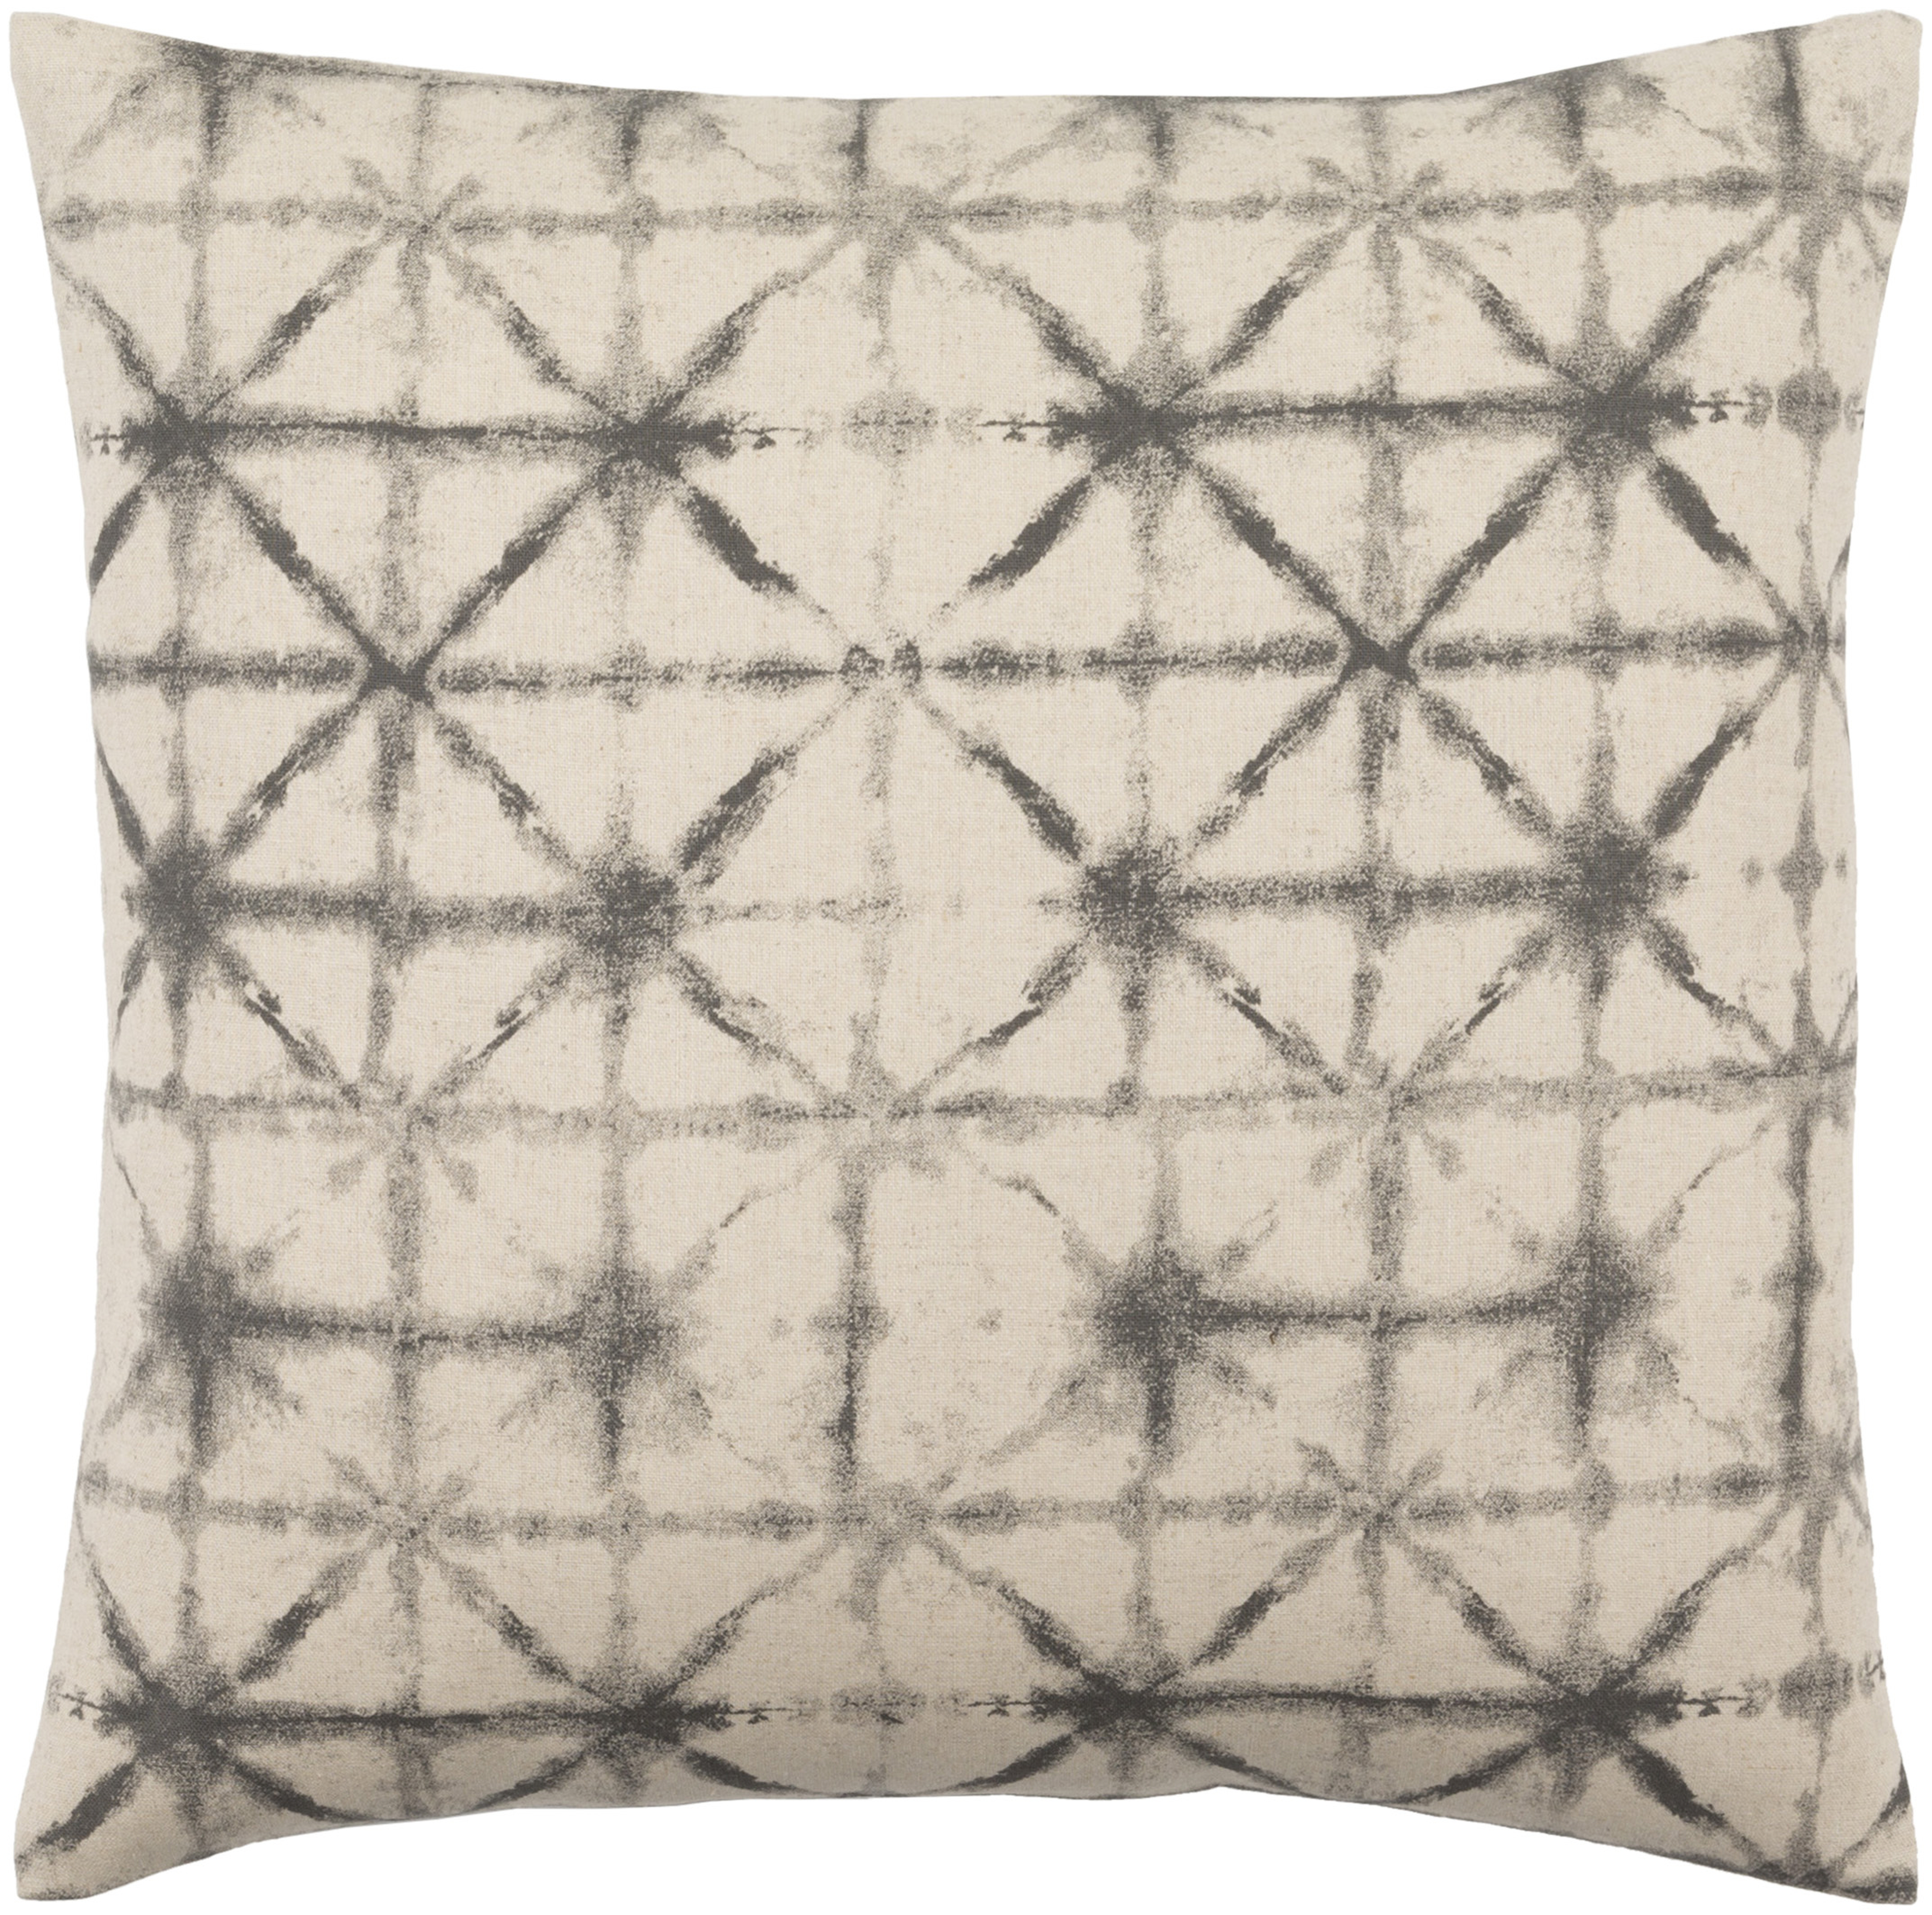 Nebula Throw Pillow, 18" x 18", with poly insert - Surya